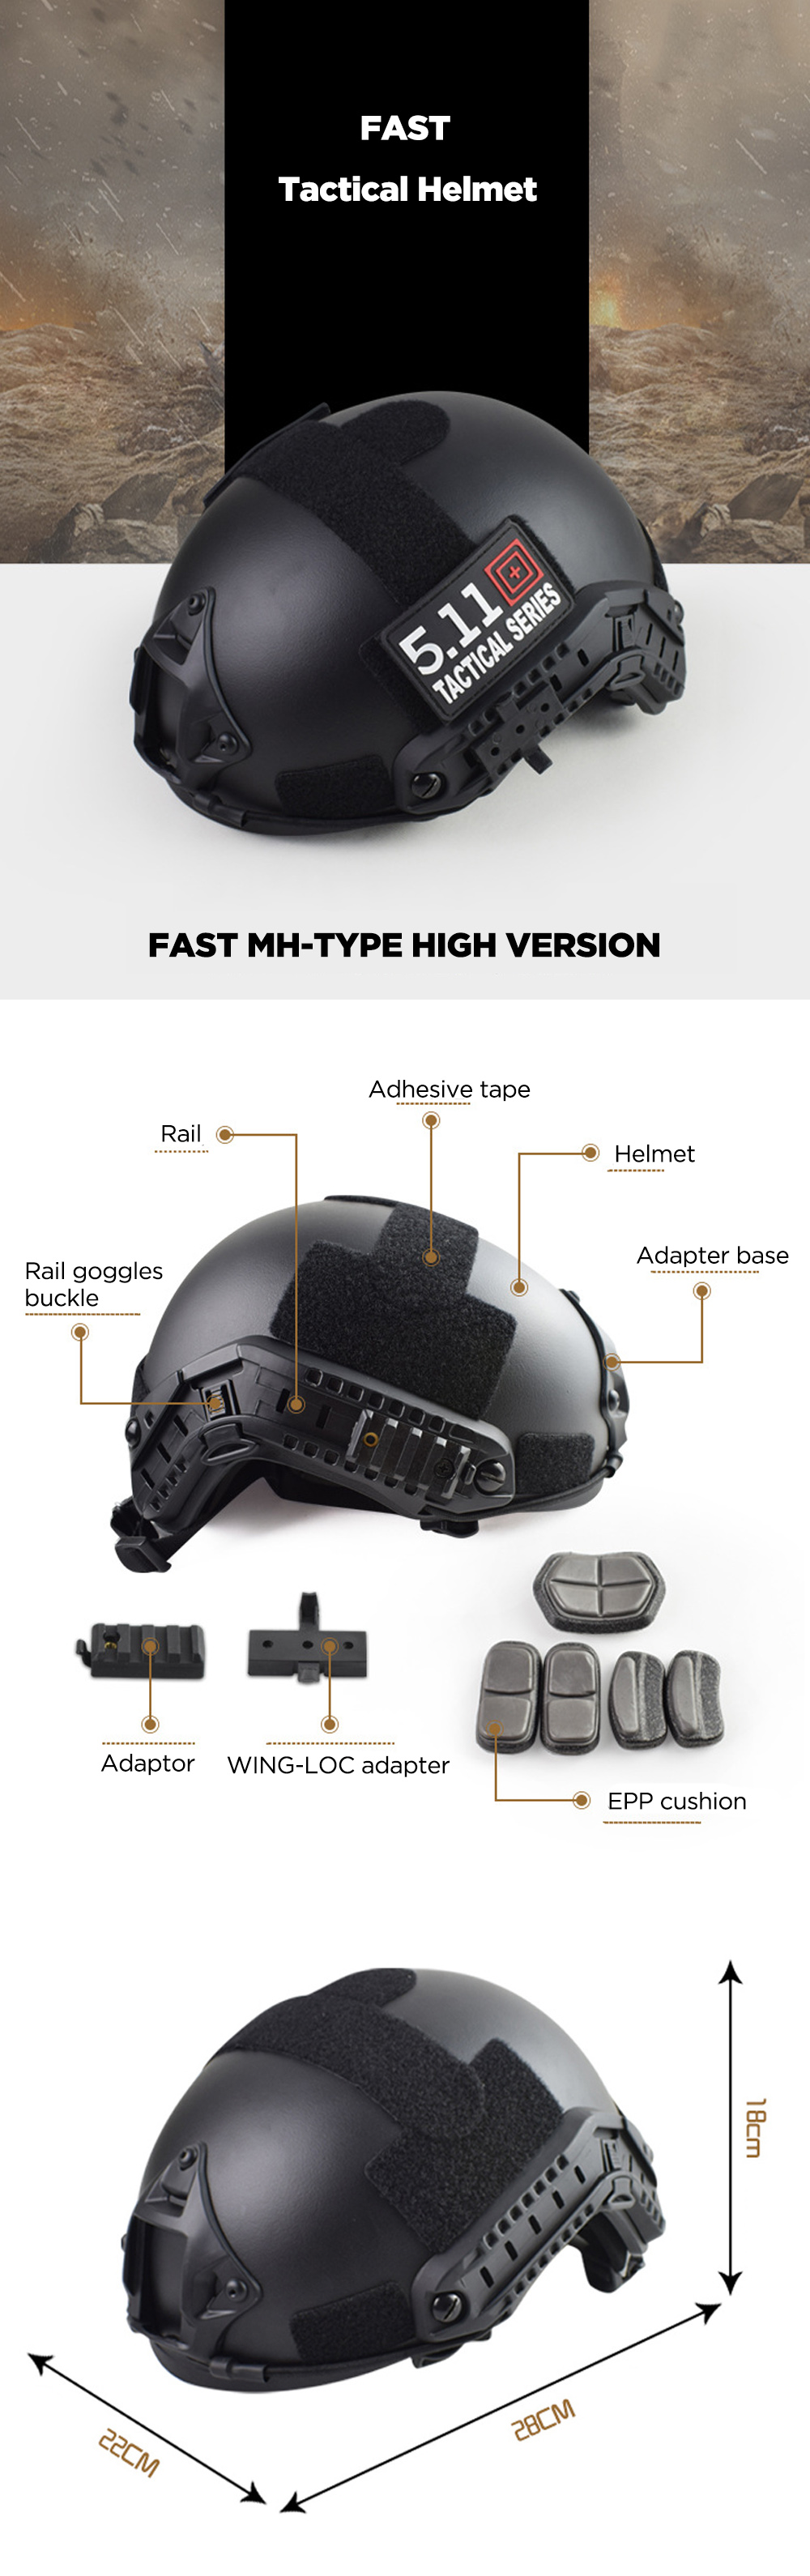 FAST-MH-Helmet-Airsoft-Tactical-Helmet-Adjustable-Sport-Comfortable-Breathable-Helmet-Cycling-Huntin-1784826-1